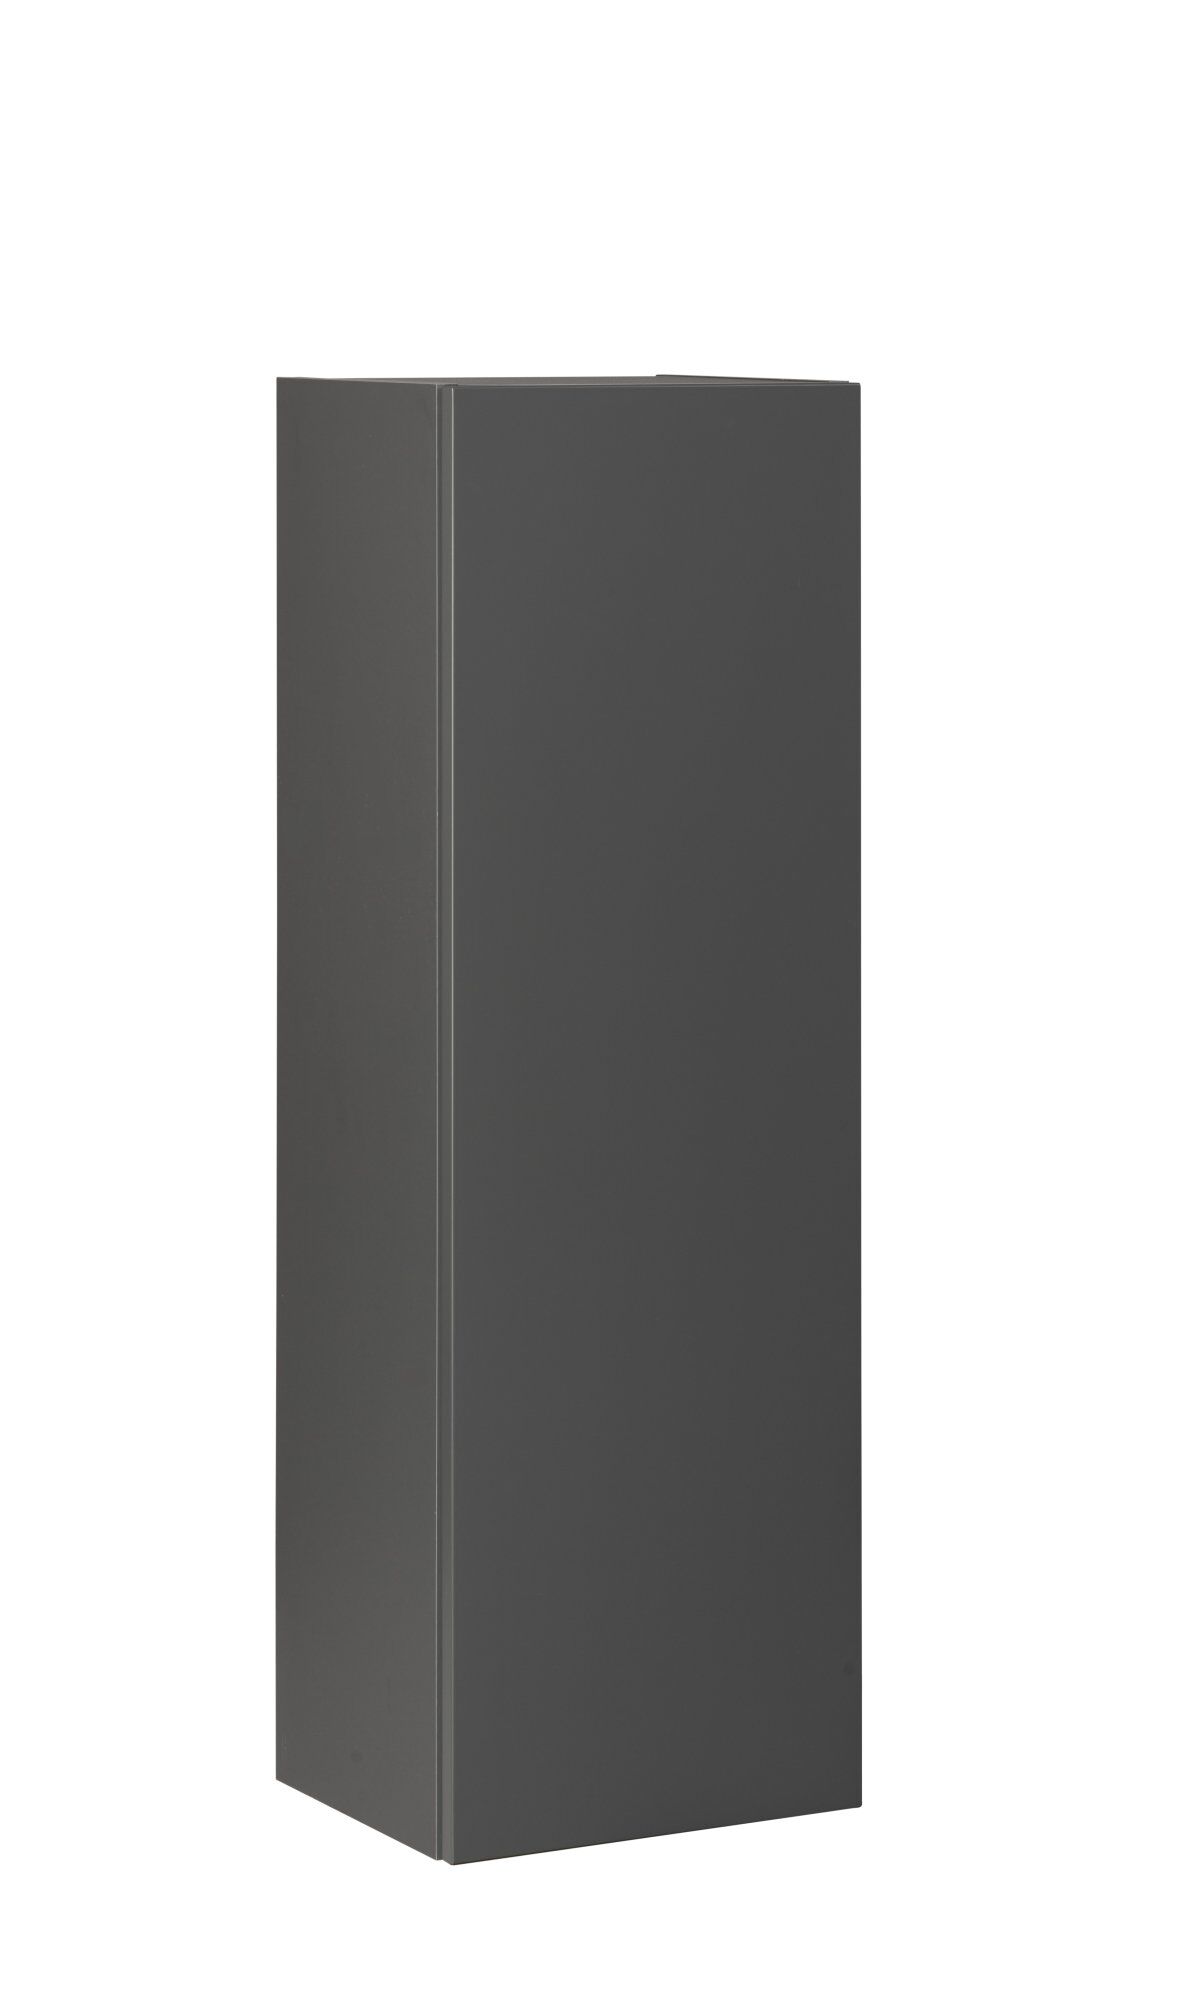 Fackelmann NEW YORK Midischrank 33 cm breit, Grau | BadeDu